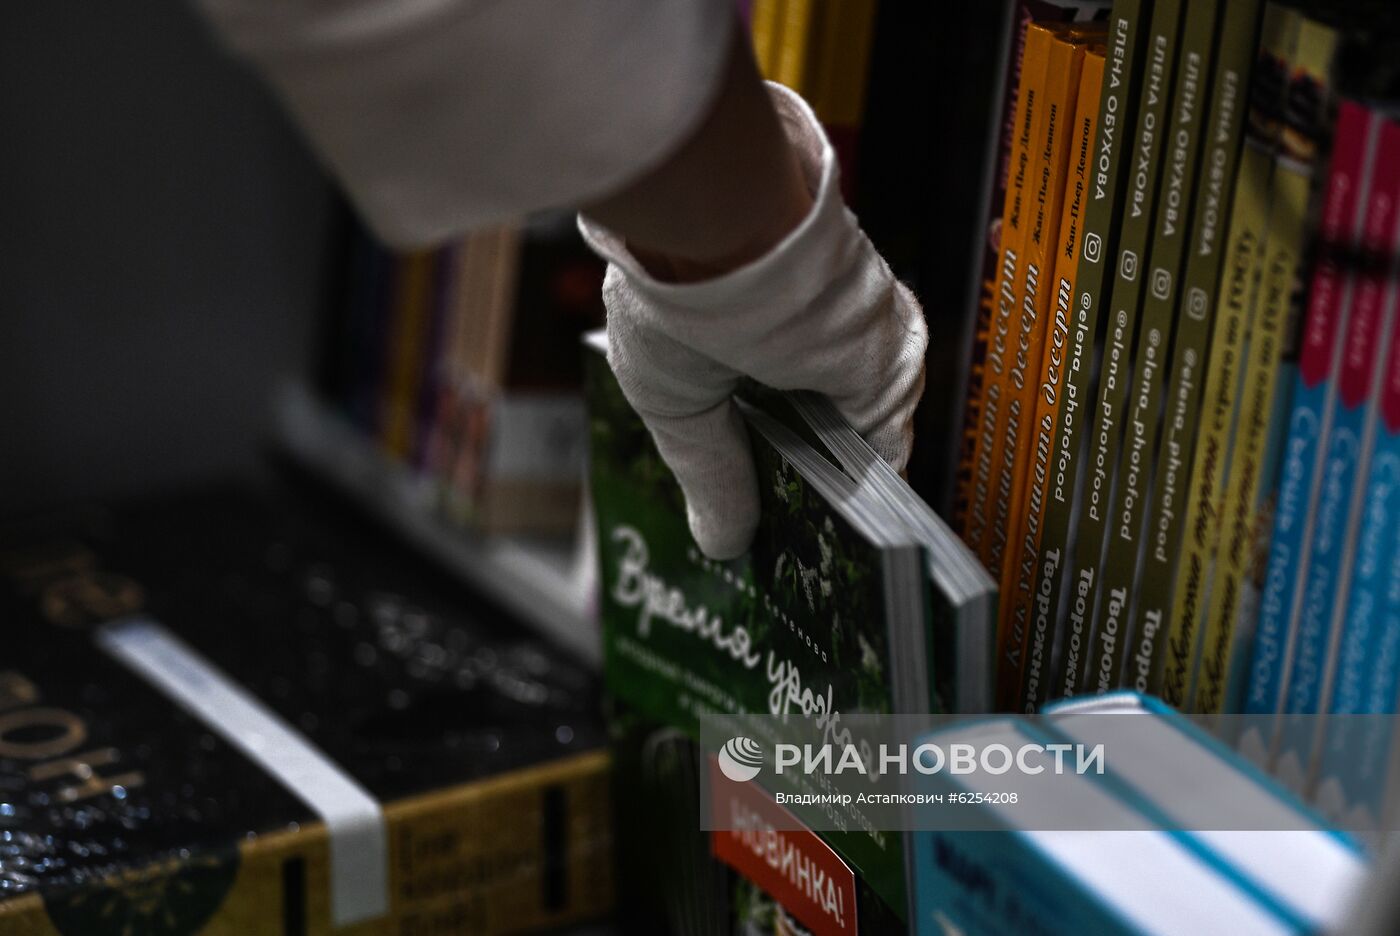 Открытие книжного магазина "Москва" после карантина